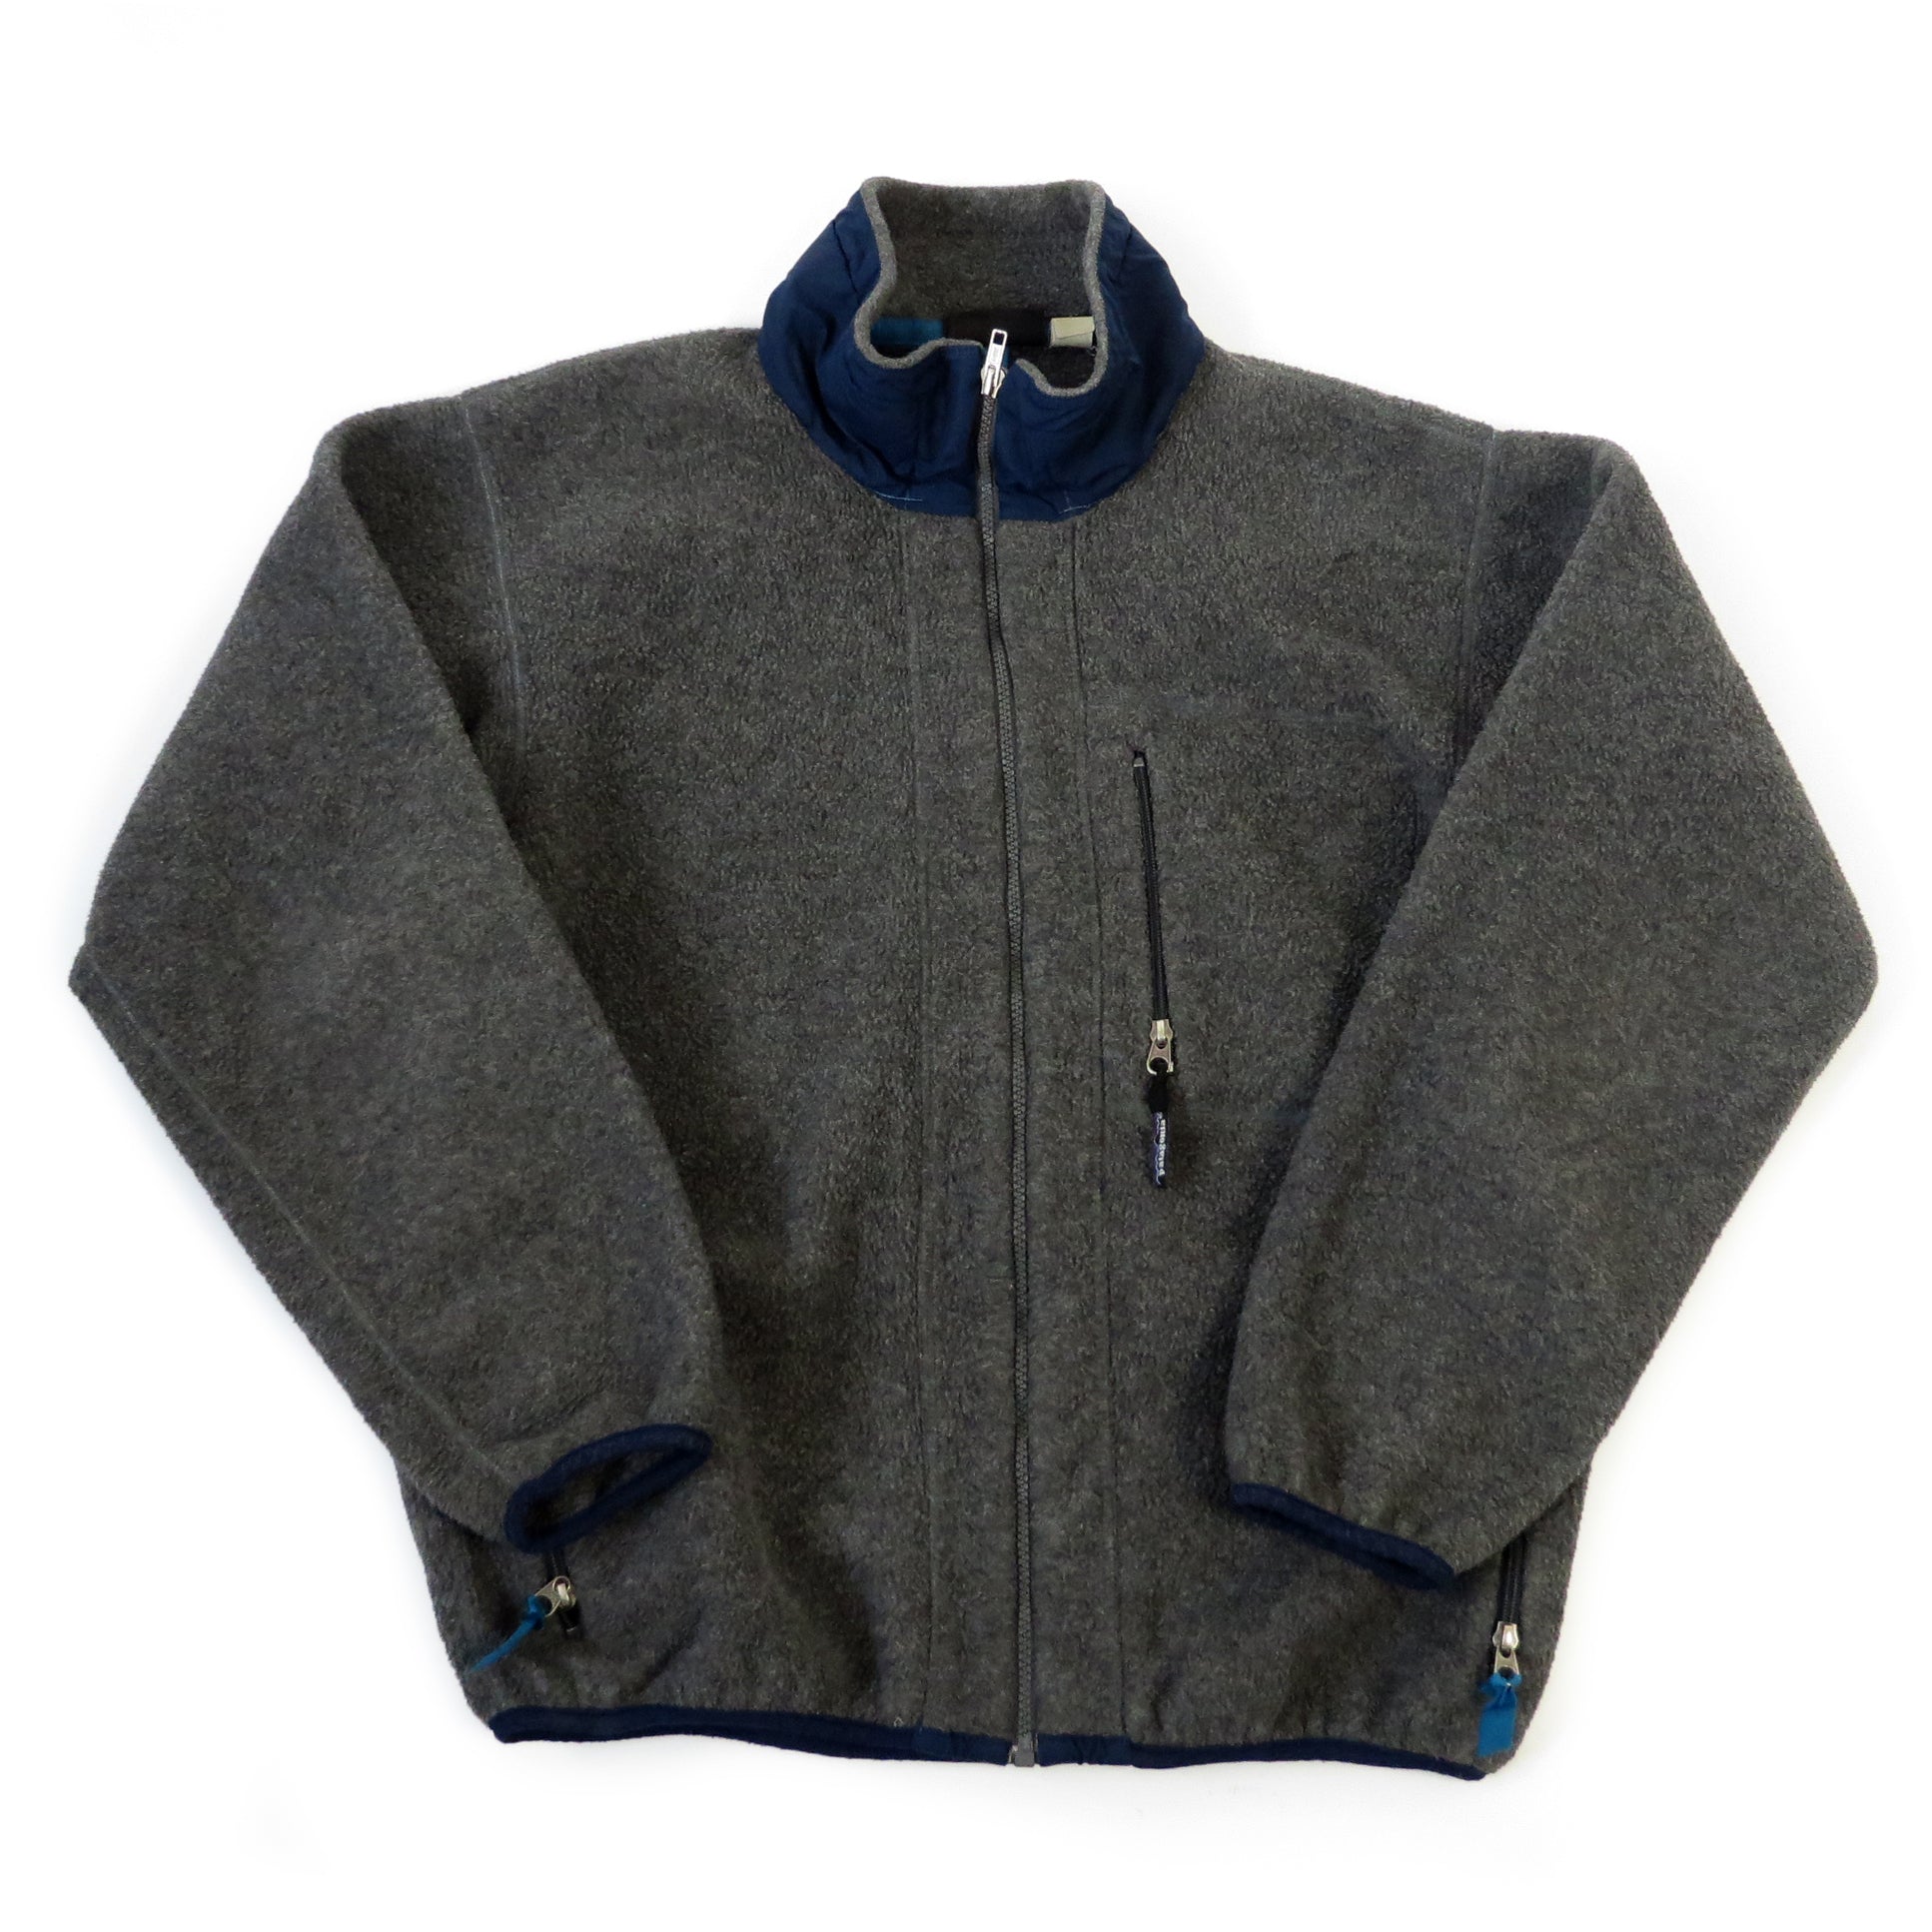 Vintage Patagonia Fleece Jacket Sz L